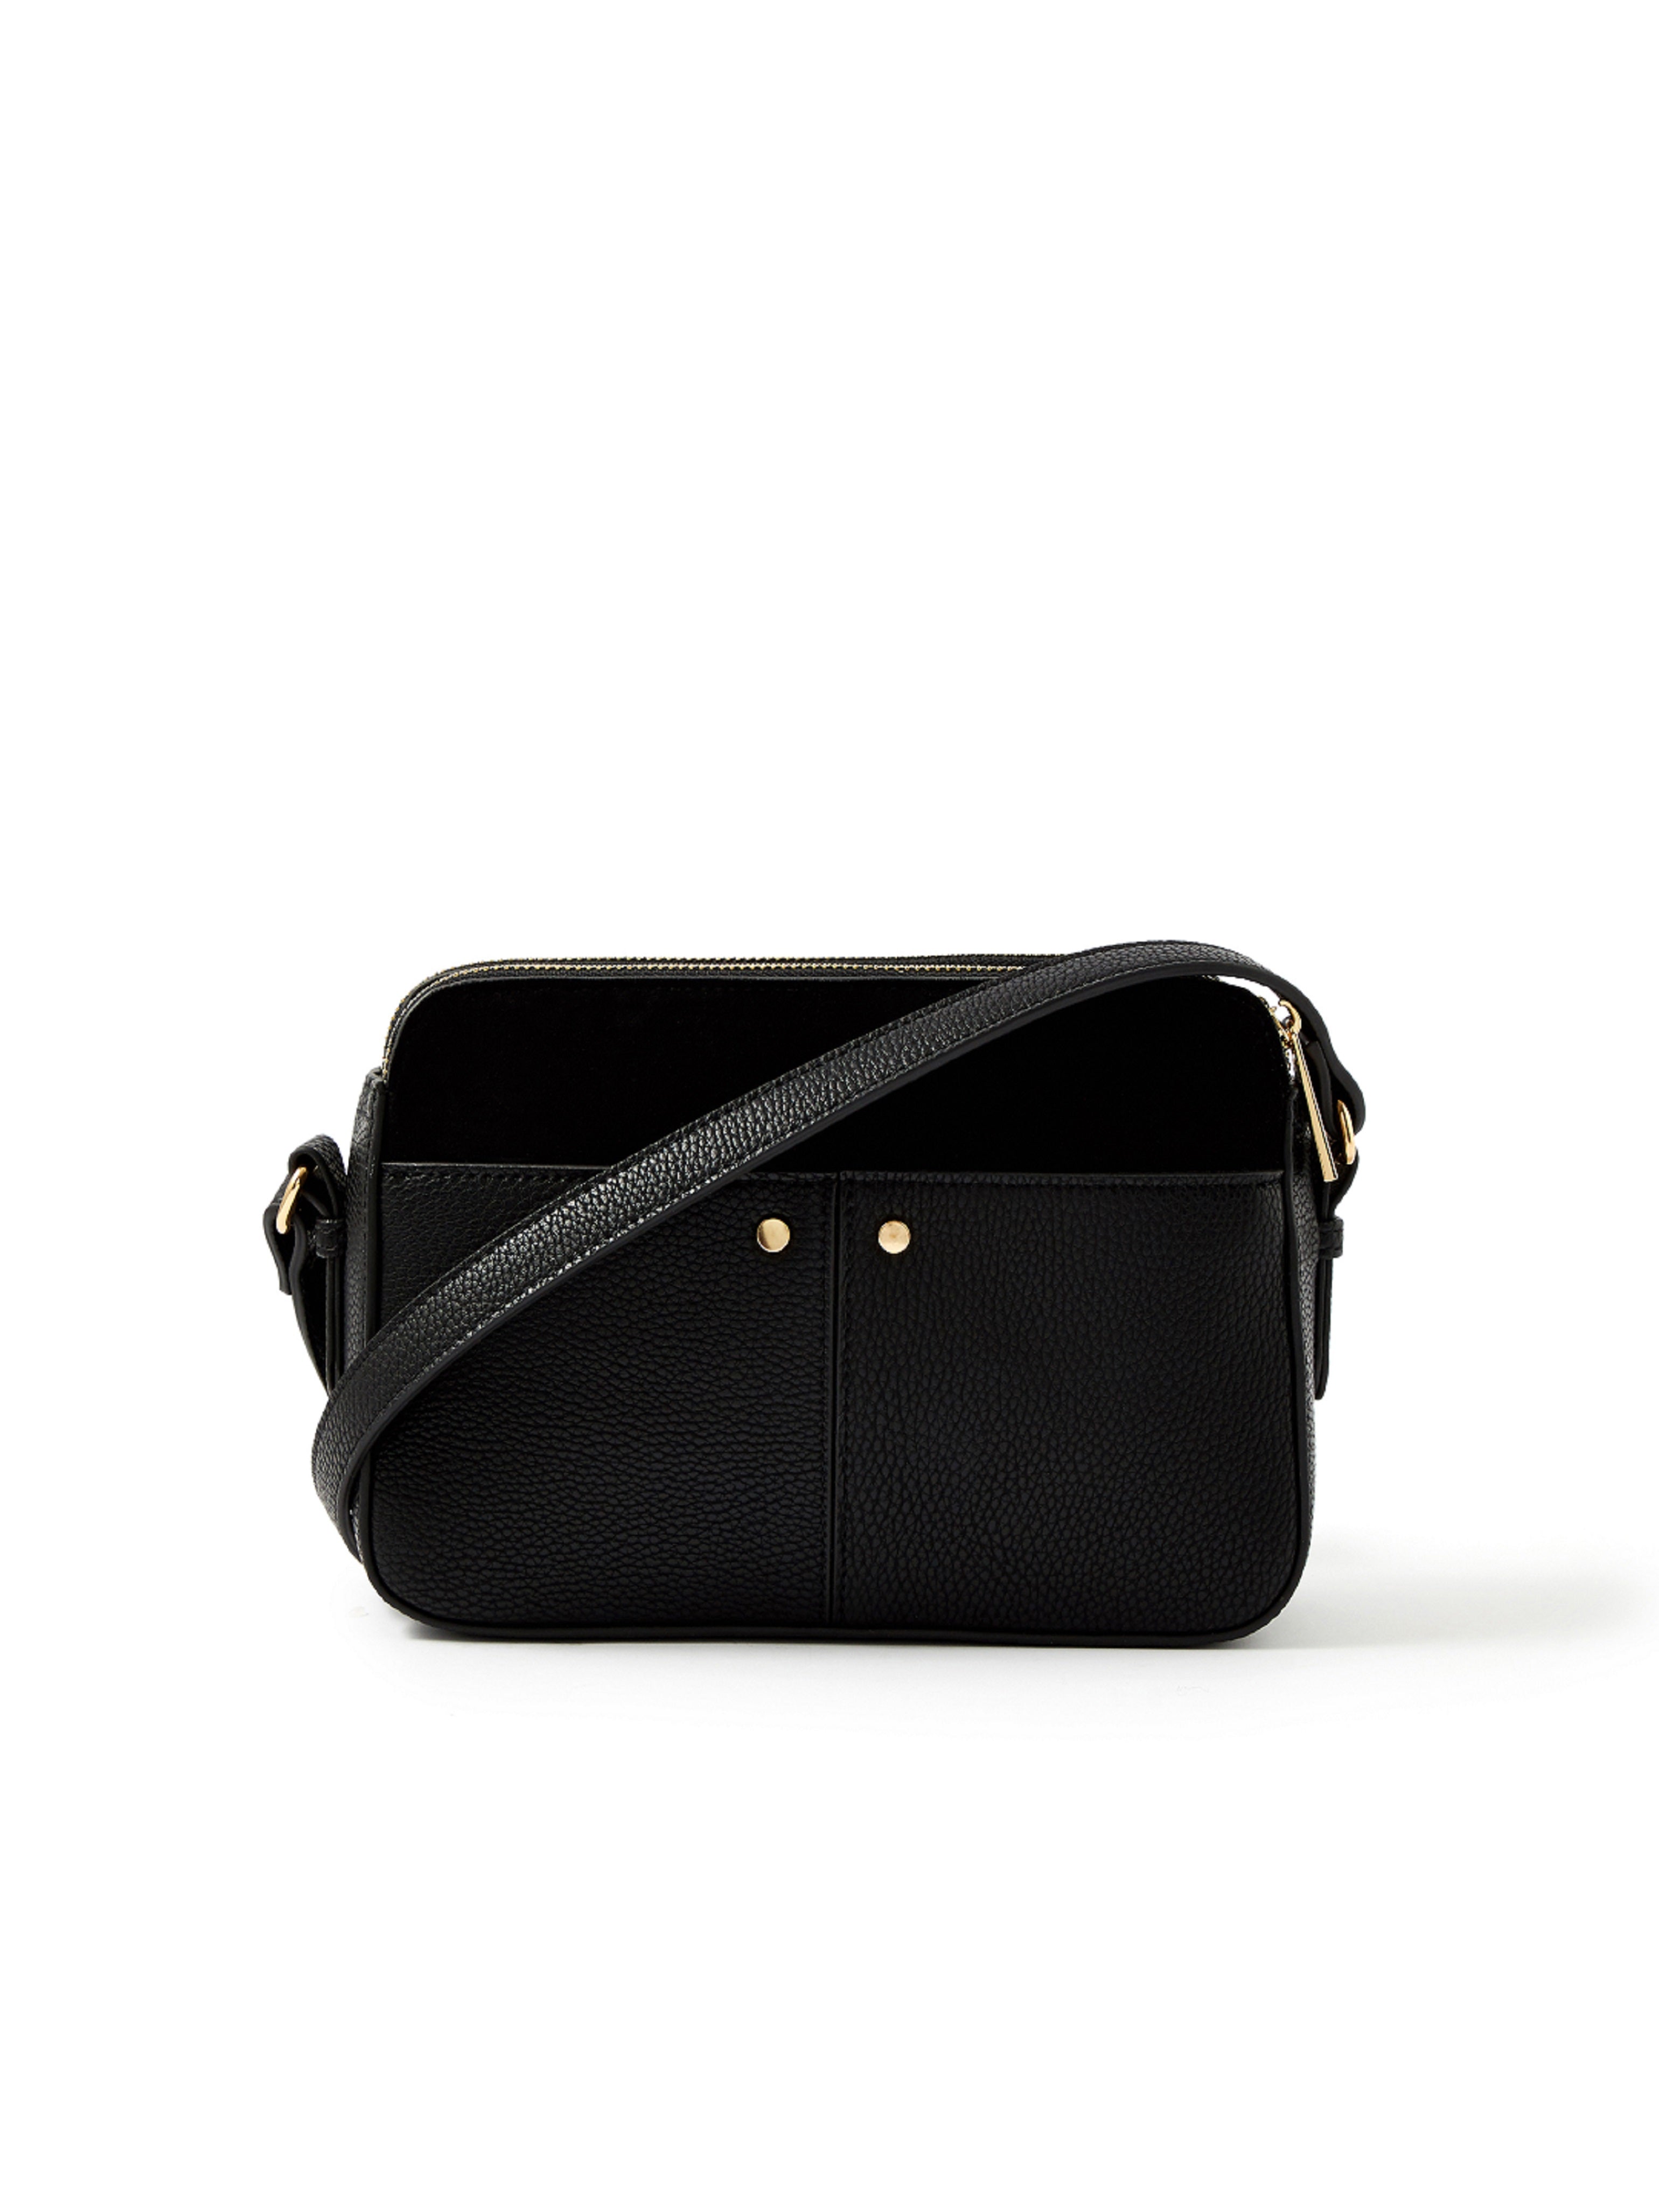 Accessorize London Women's Black Faux Leather Charlotte Sling bag | Daily  Use Messenger Ladies Purse Handbag, Stylish Side Bag For Women : Amazon.in:  Fashion